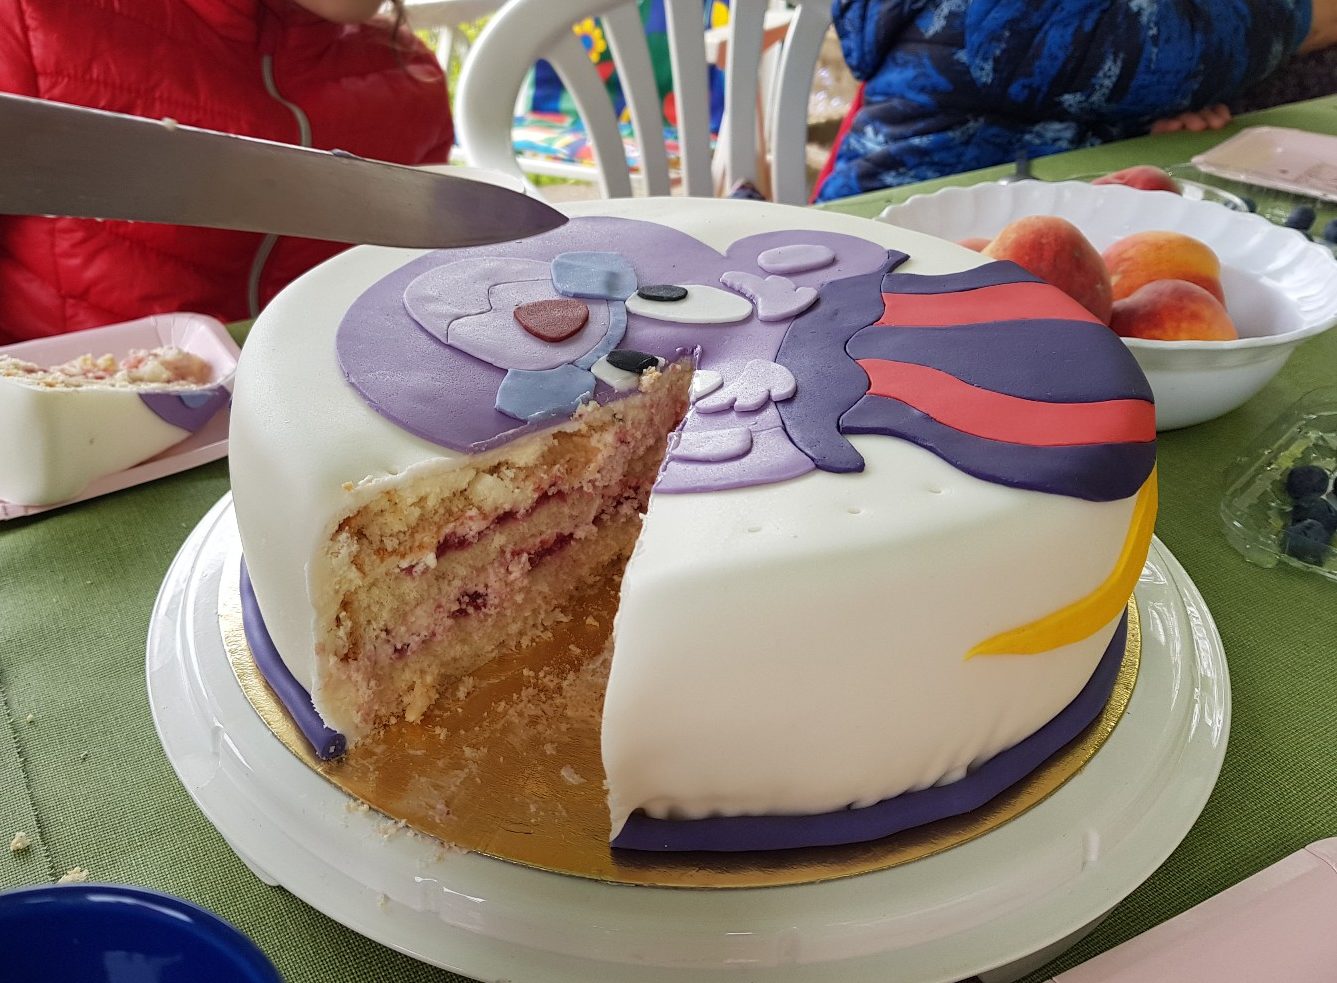 gummi bears birthday cake cut